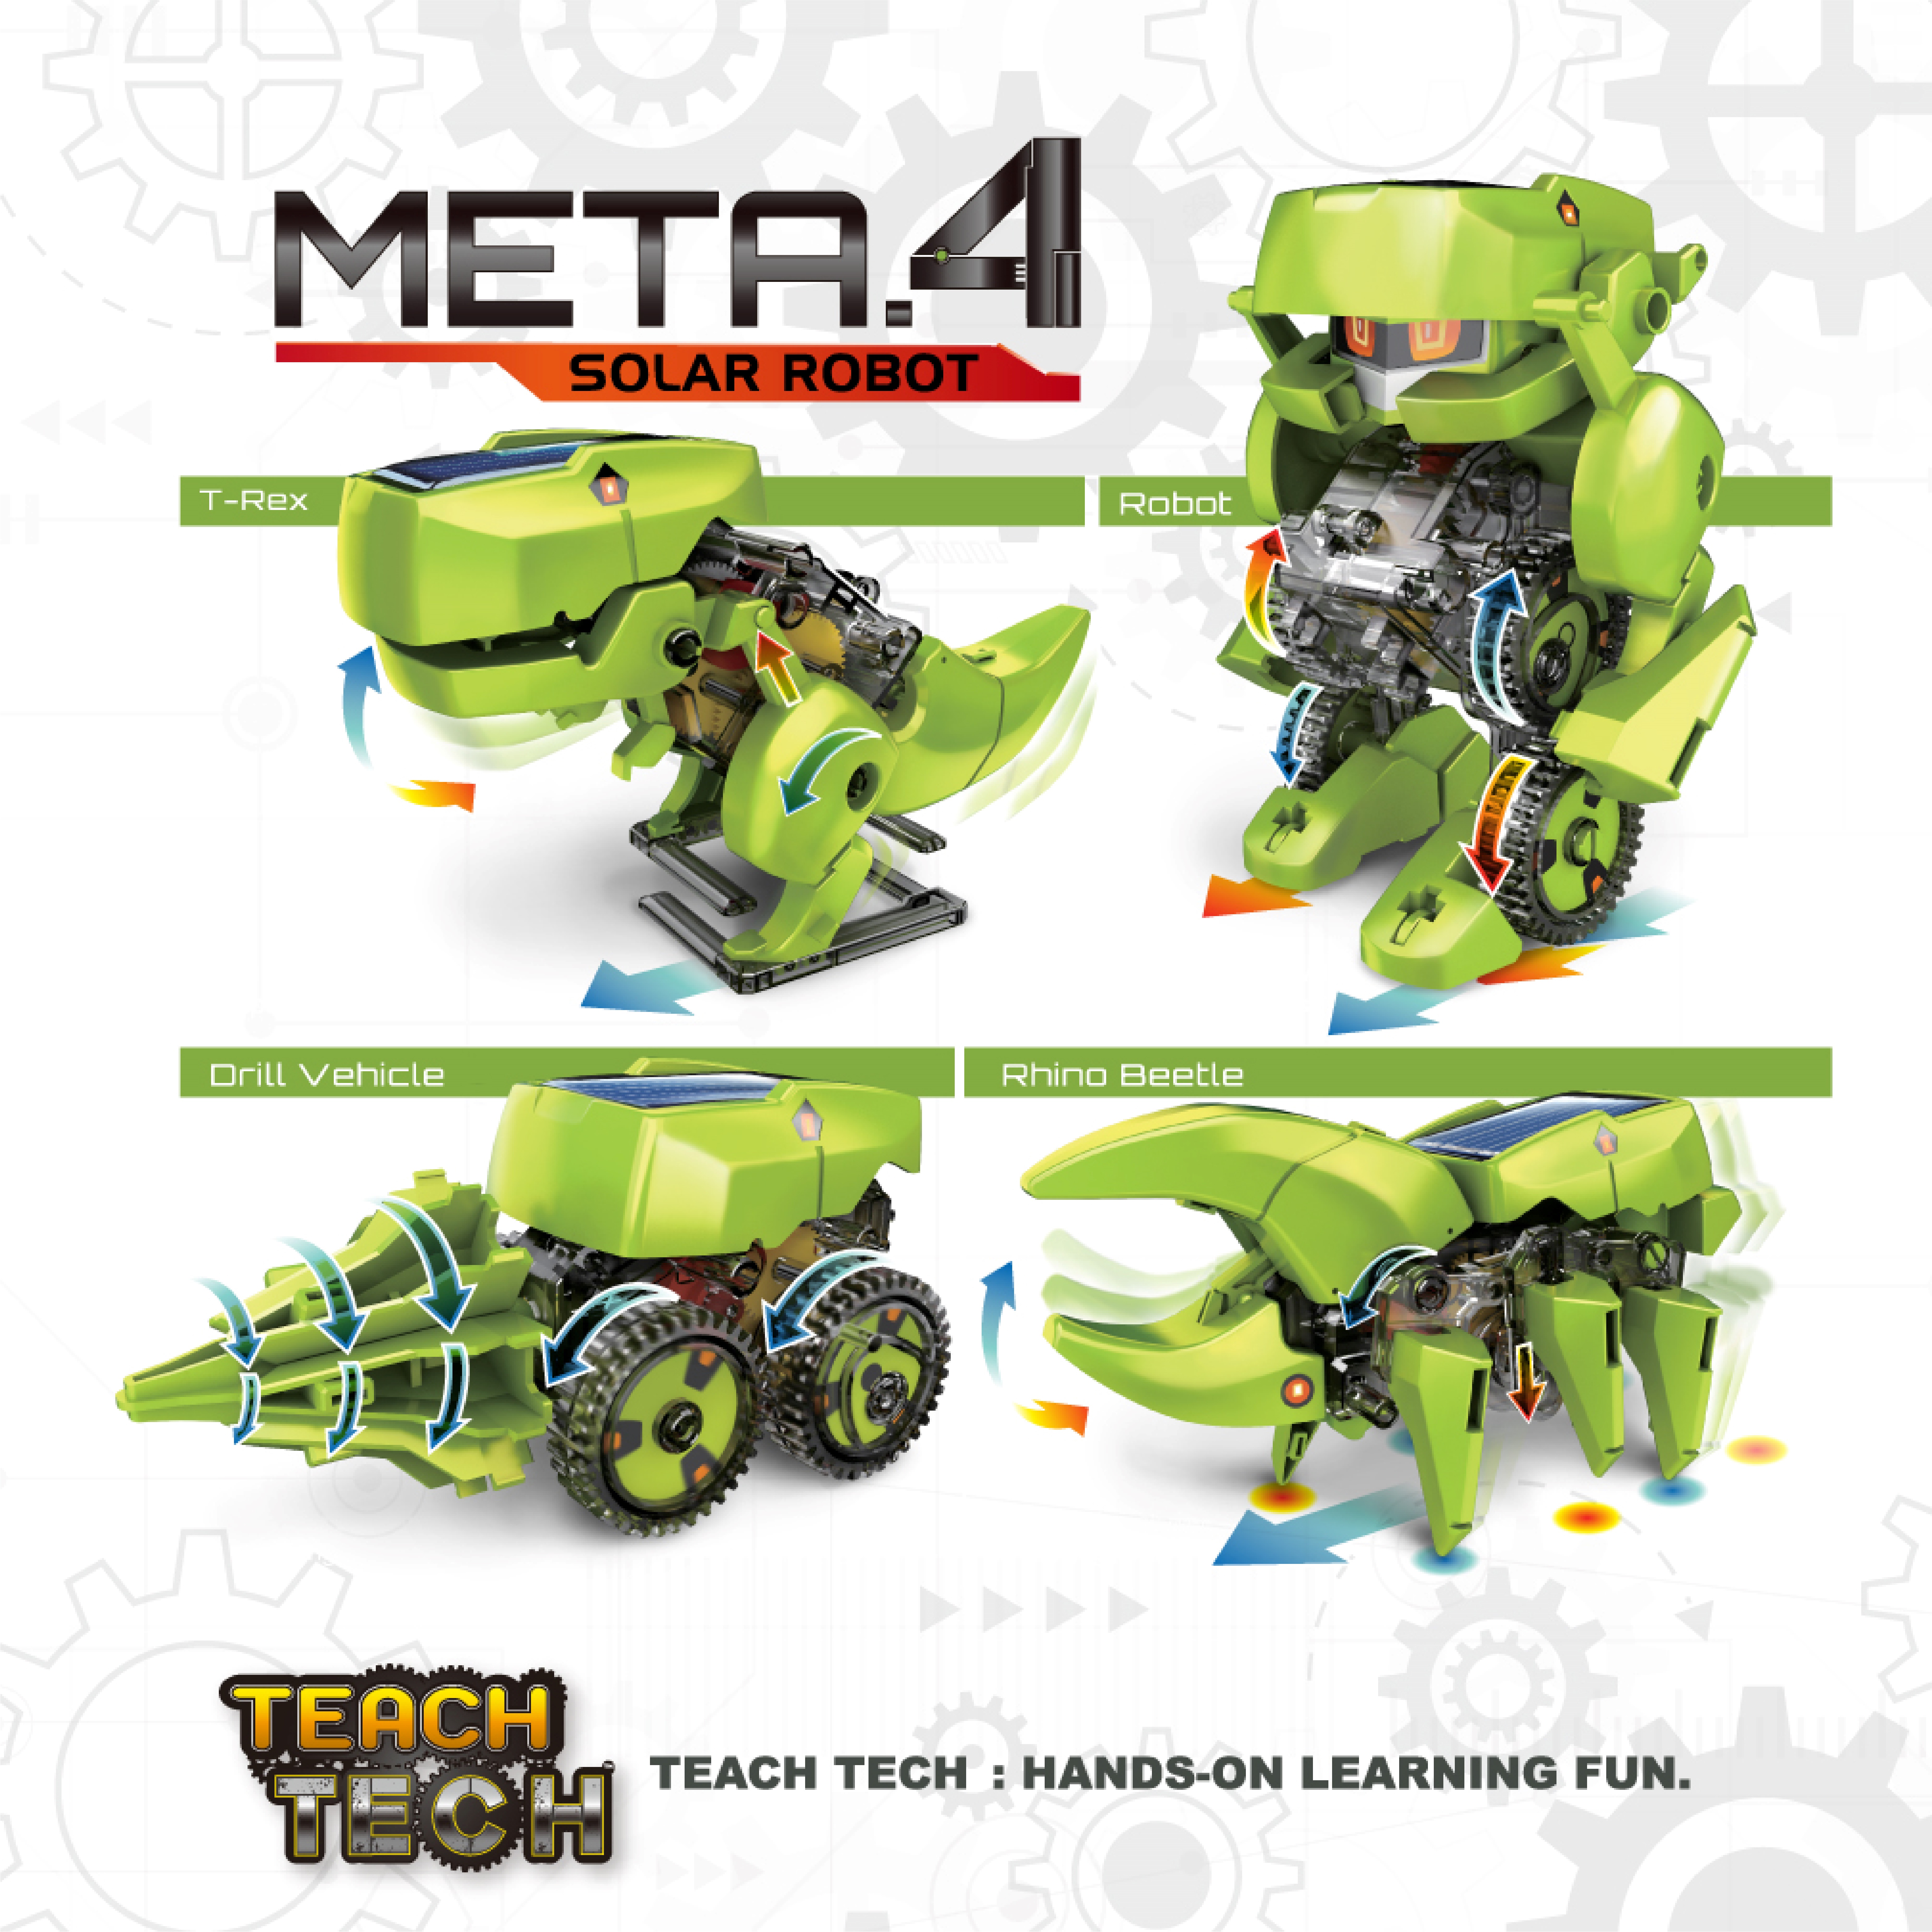 Teach Tech™ Meta.4 Solar Robot | 4-in-1 Robot Kit | STEM Educational Toy for Kids 8+ - image 3 of 9